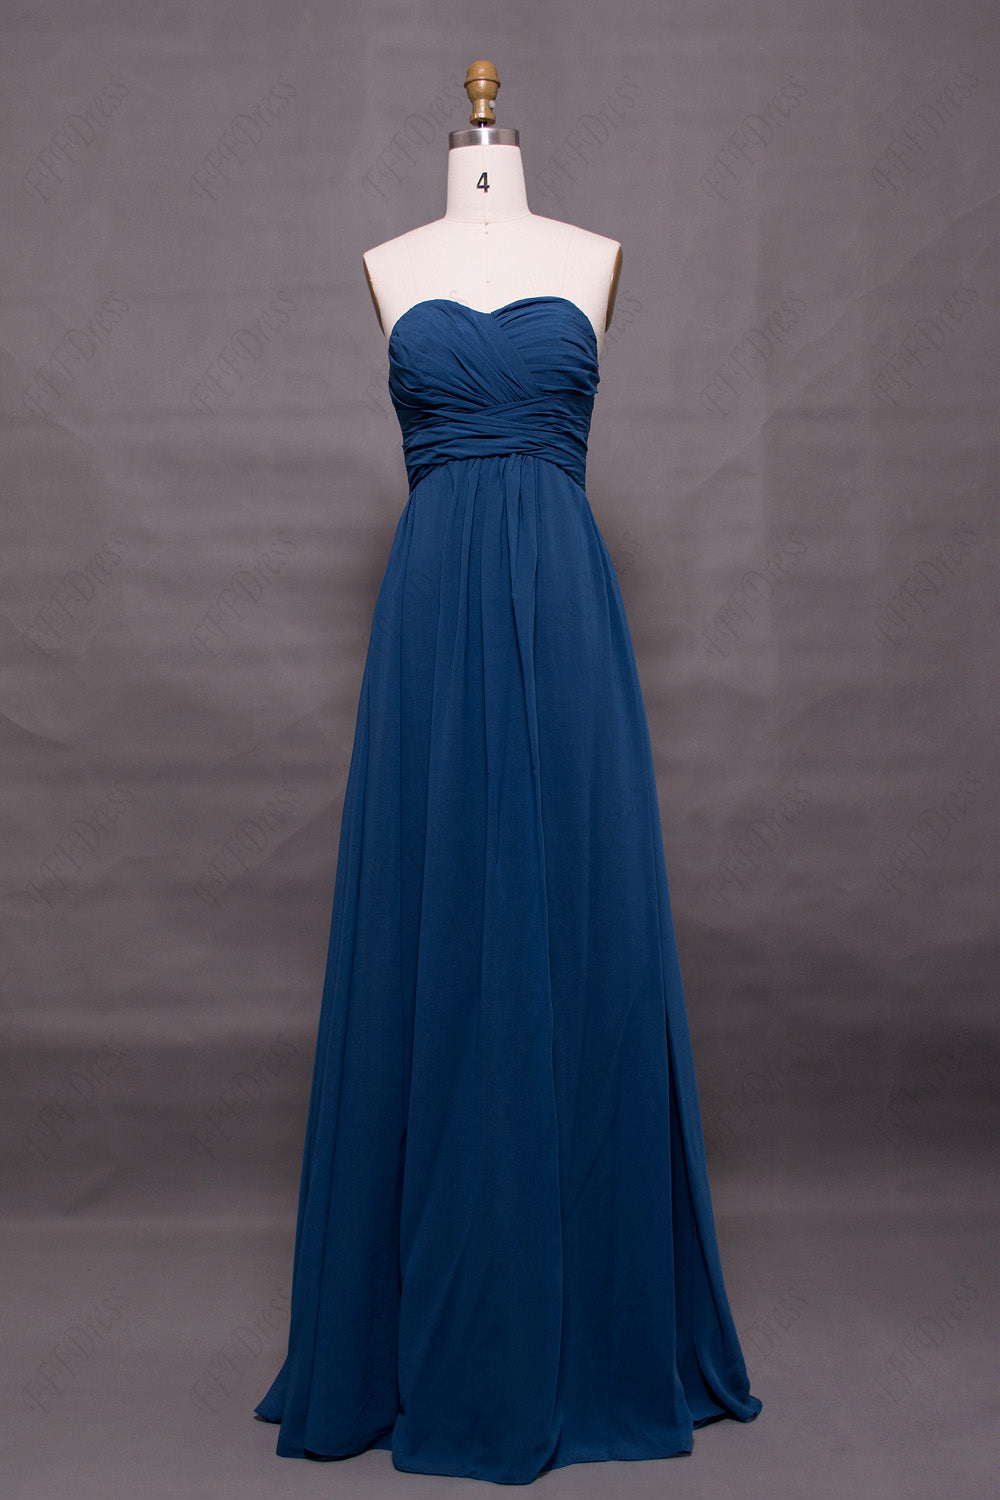 Sweetheart indigo blue bridesmaid dresses long